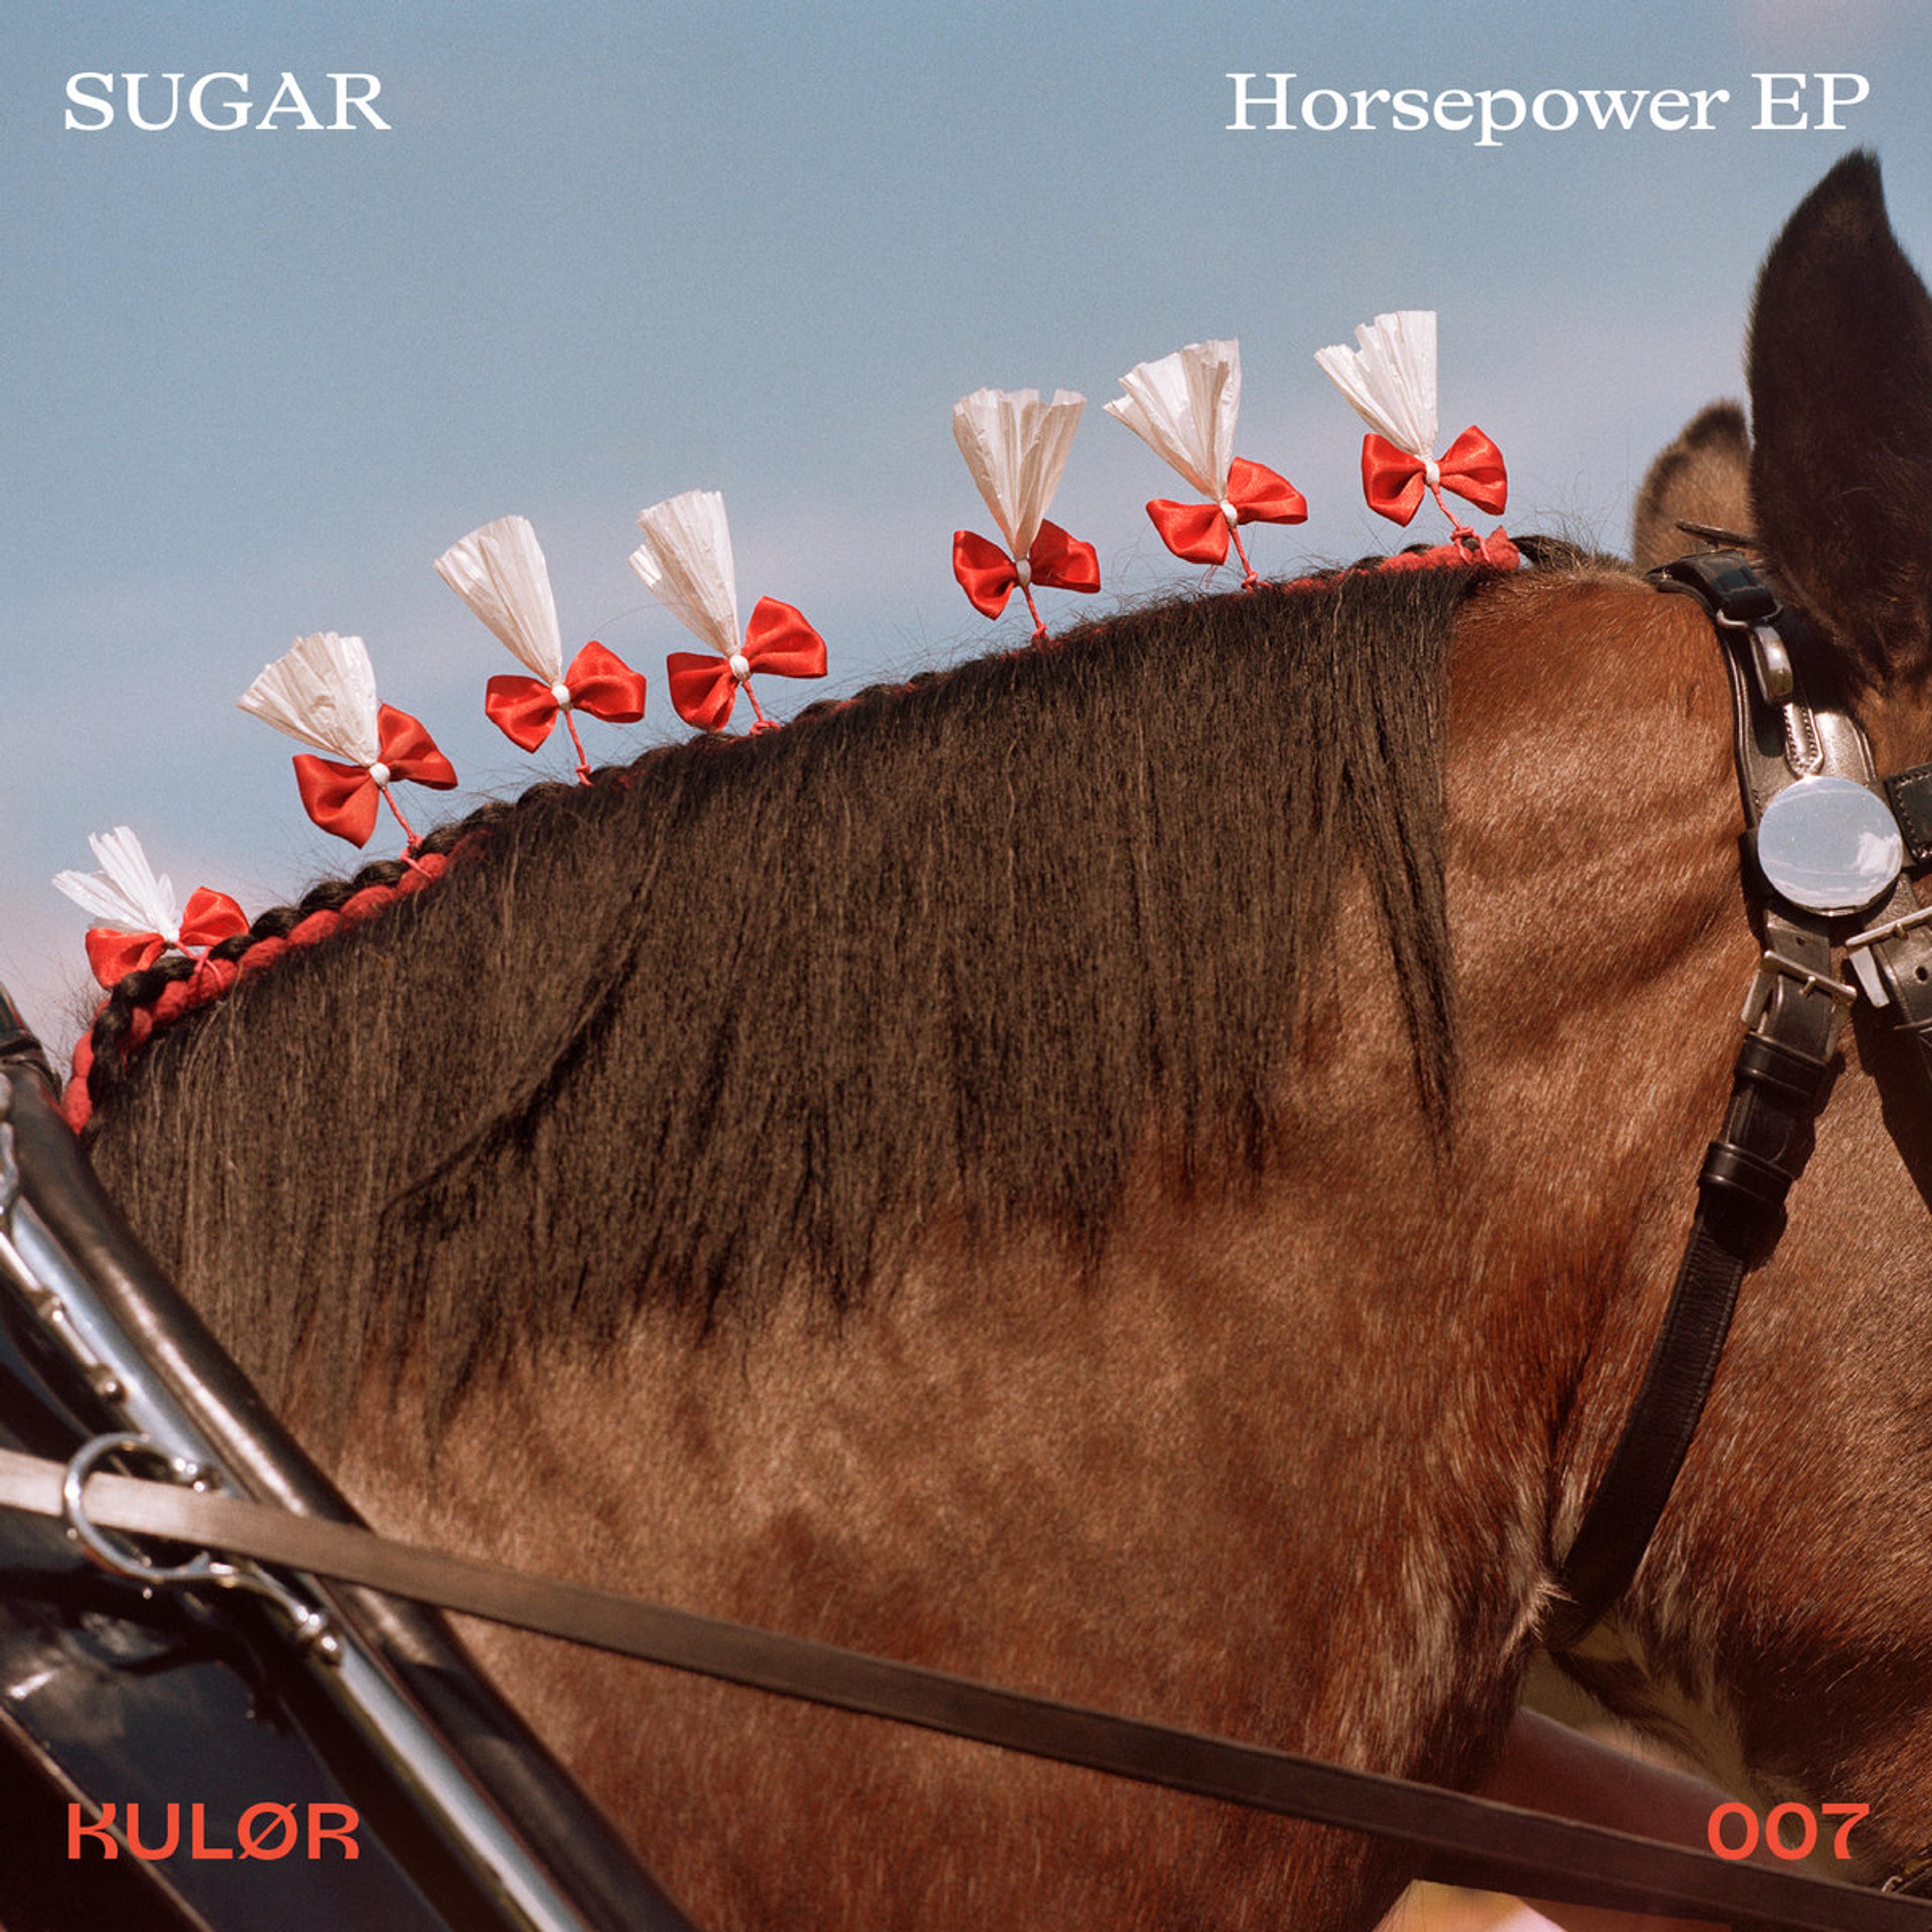 Artwork for Horsepower EP by Sugar